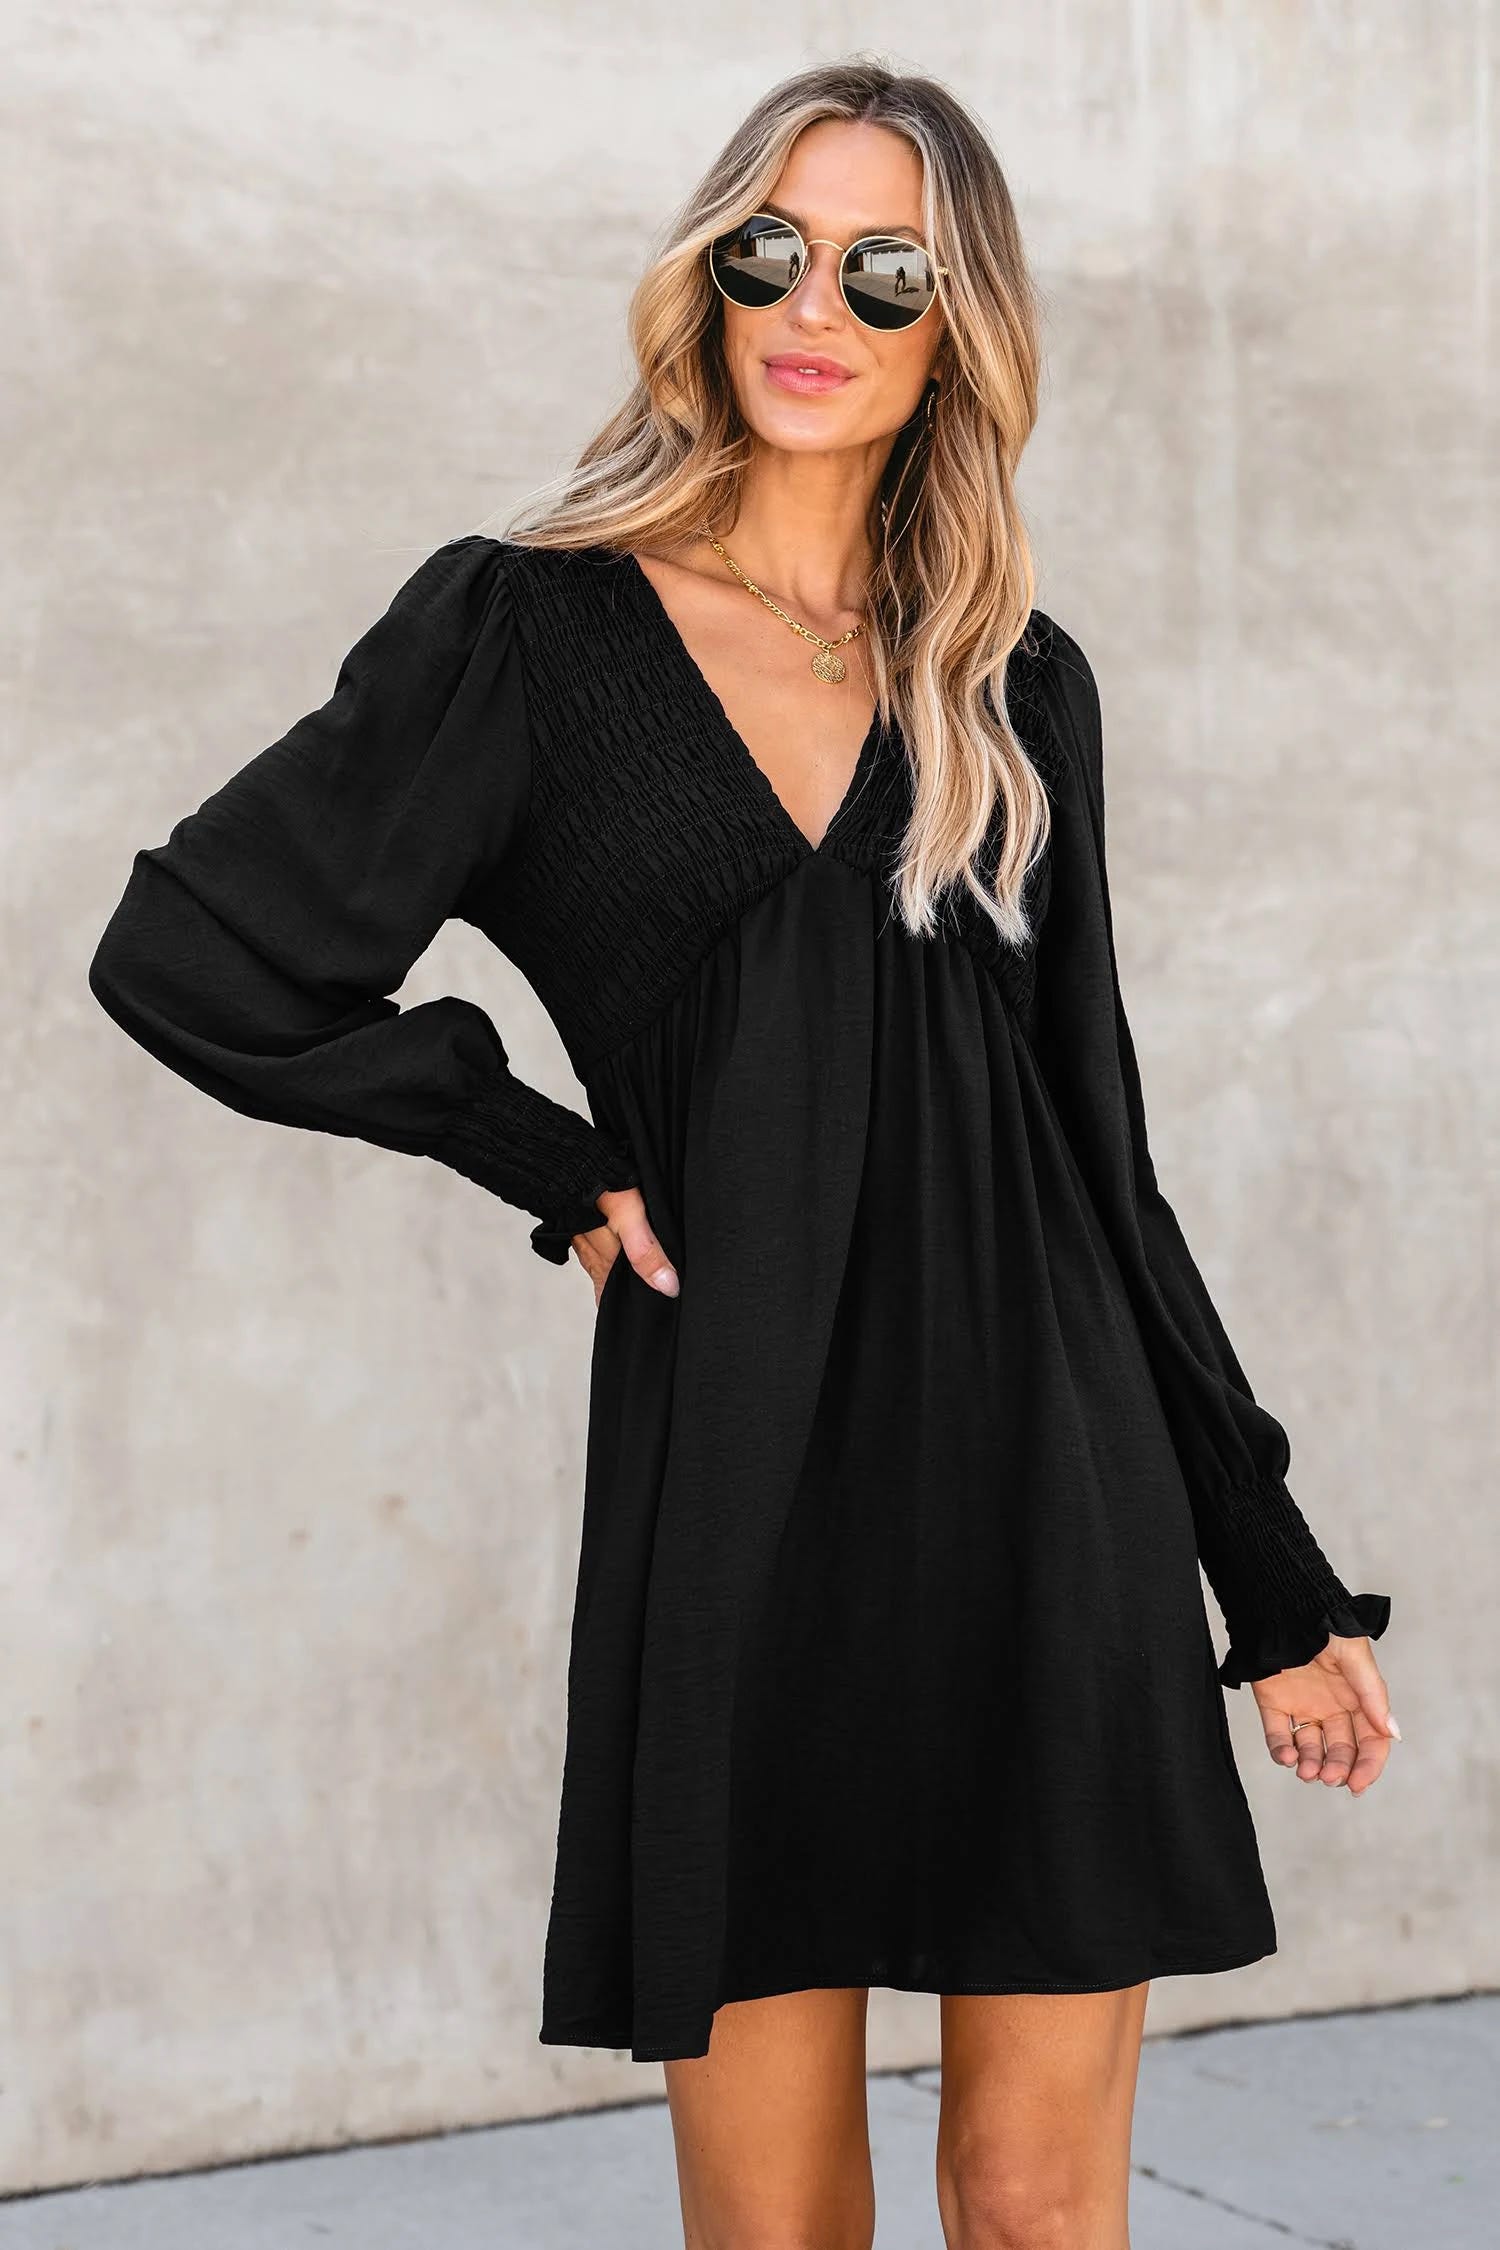 Sophisticated Black Smocked Mini Dress for Summer | Image